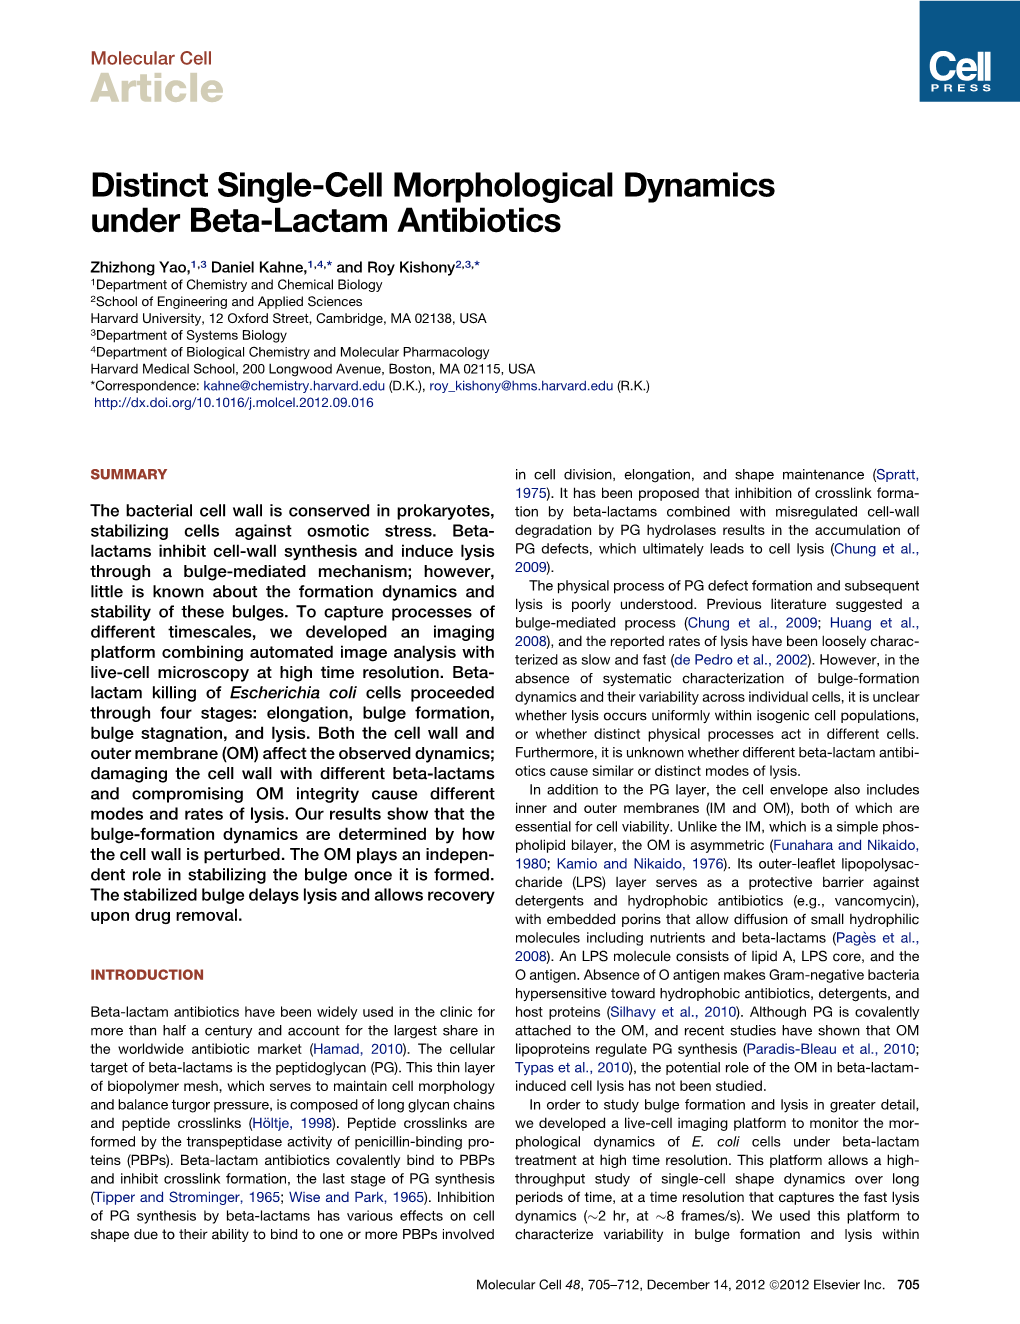 Distinct Single-Cell Morphological Dynamics Under Beta-Lactam Antibiotics